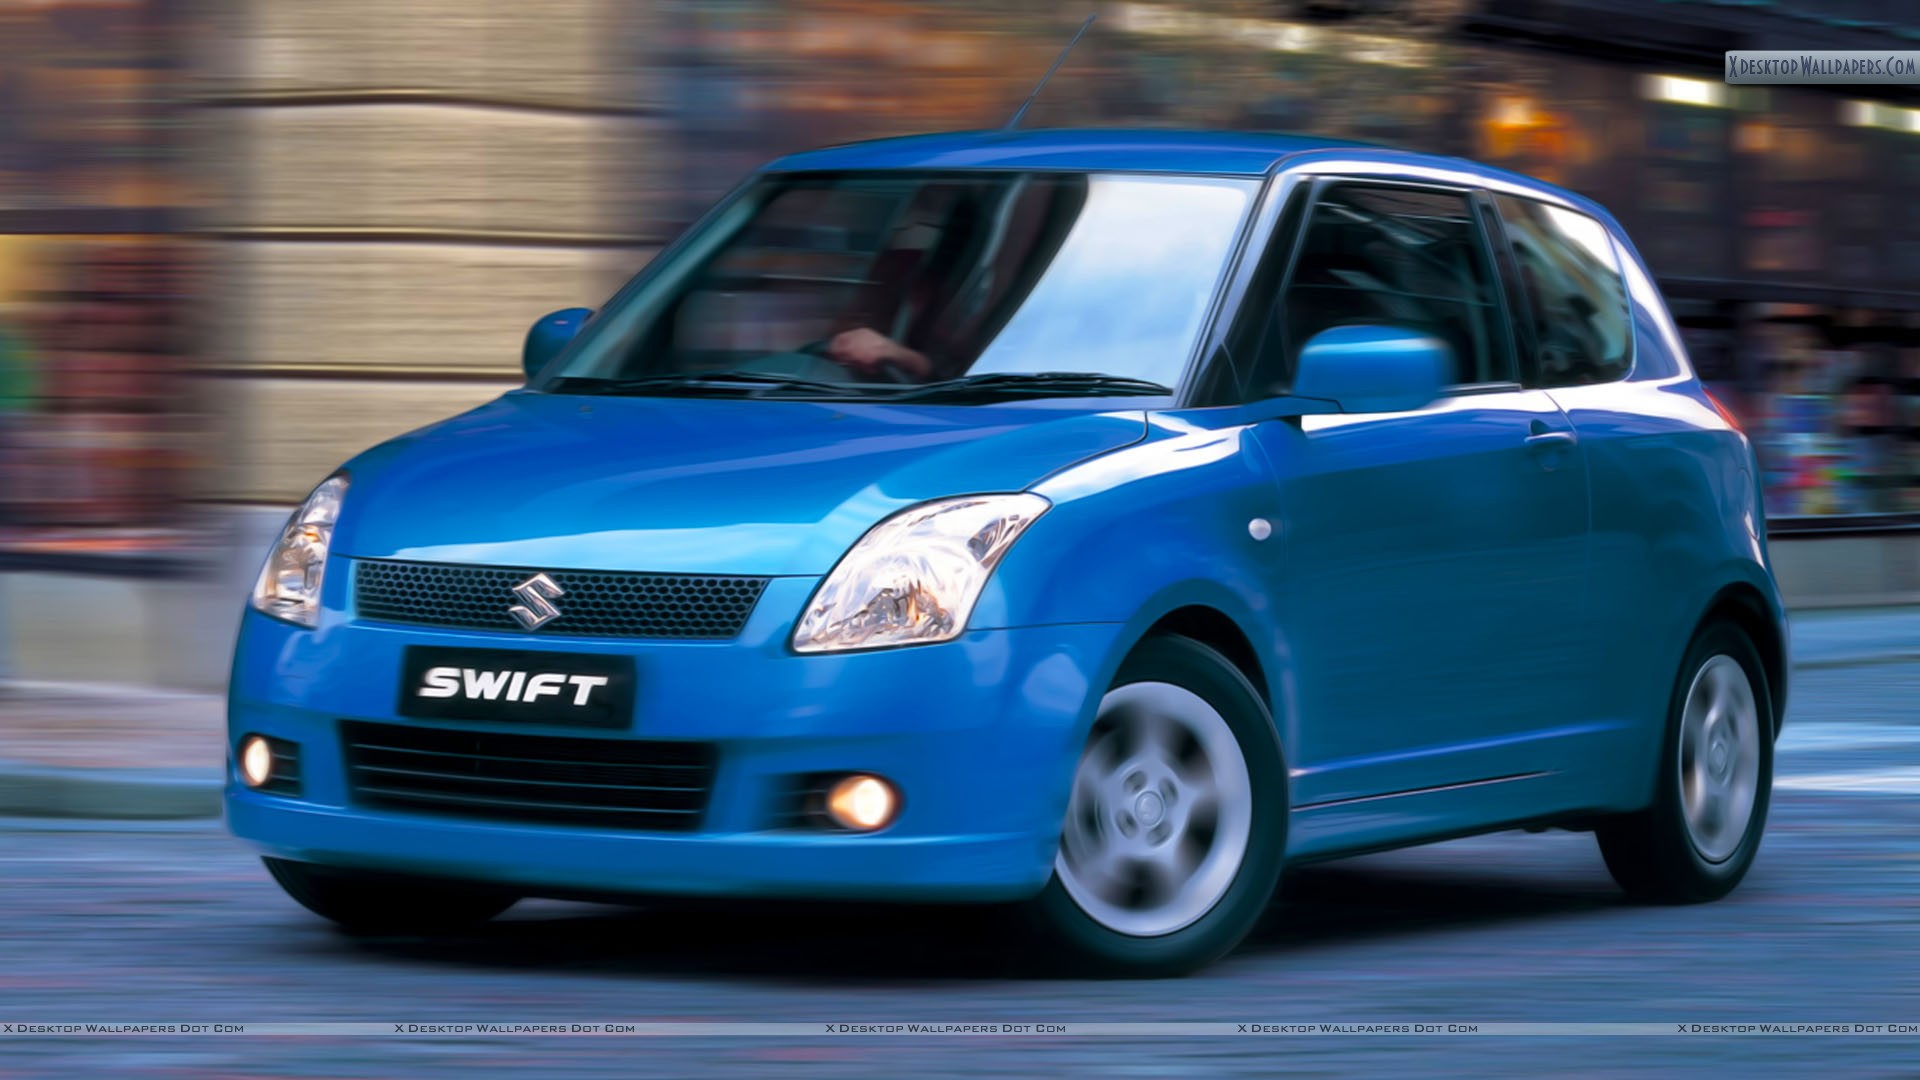 Suzuki Swift Street Cars wallpaper | cars | Wallpaper Better